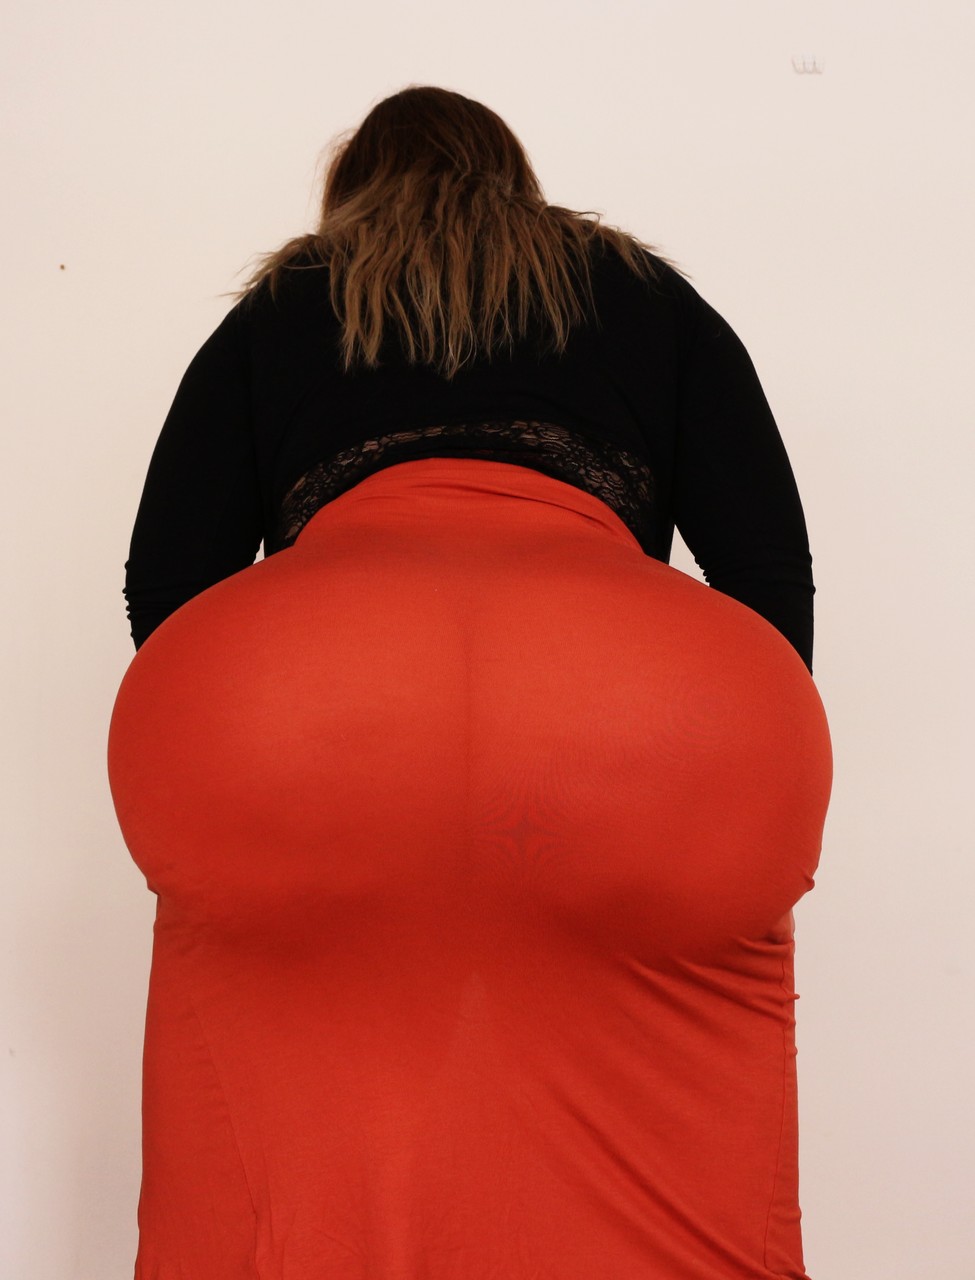 Stunning MILF fatty Natasha Crown flaunting her very big ass in a tight skirt ポルノ写真 #423816671 | Natasha Crown Pics, Natasha Crown, BBW, モバイルポルノ